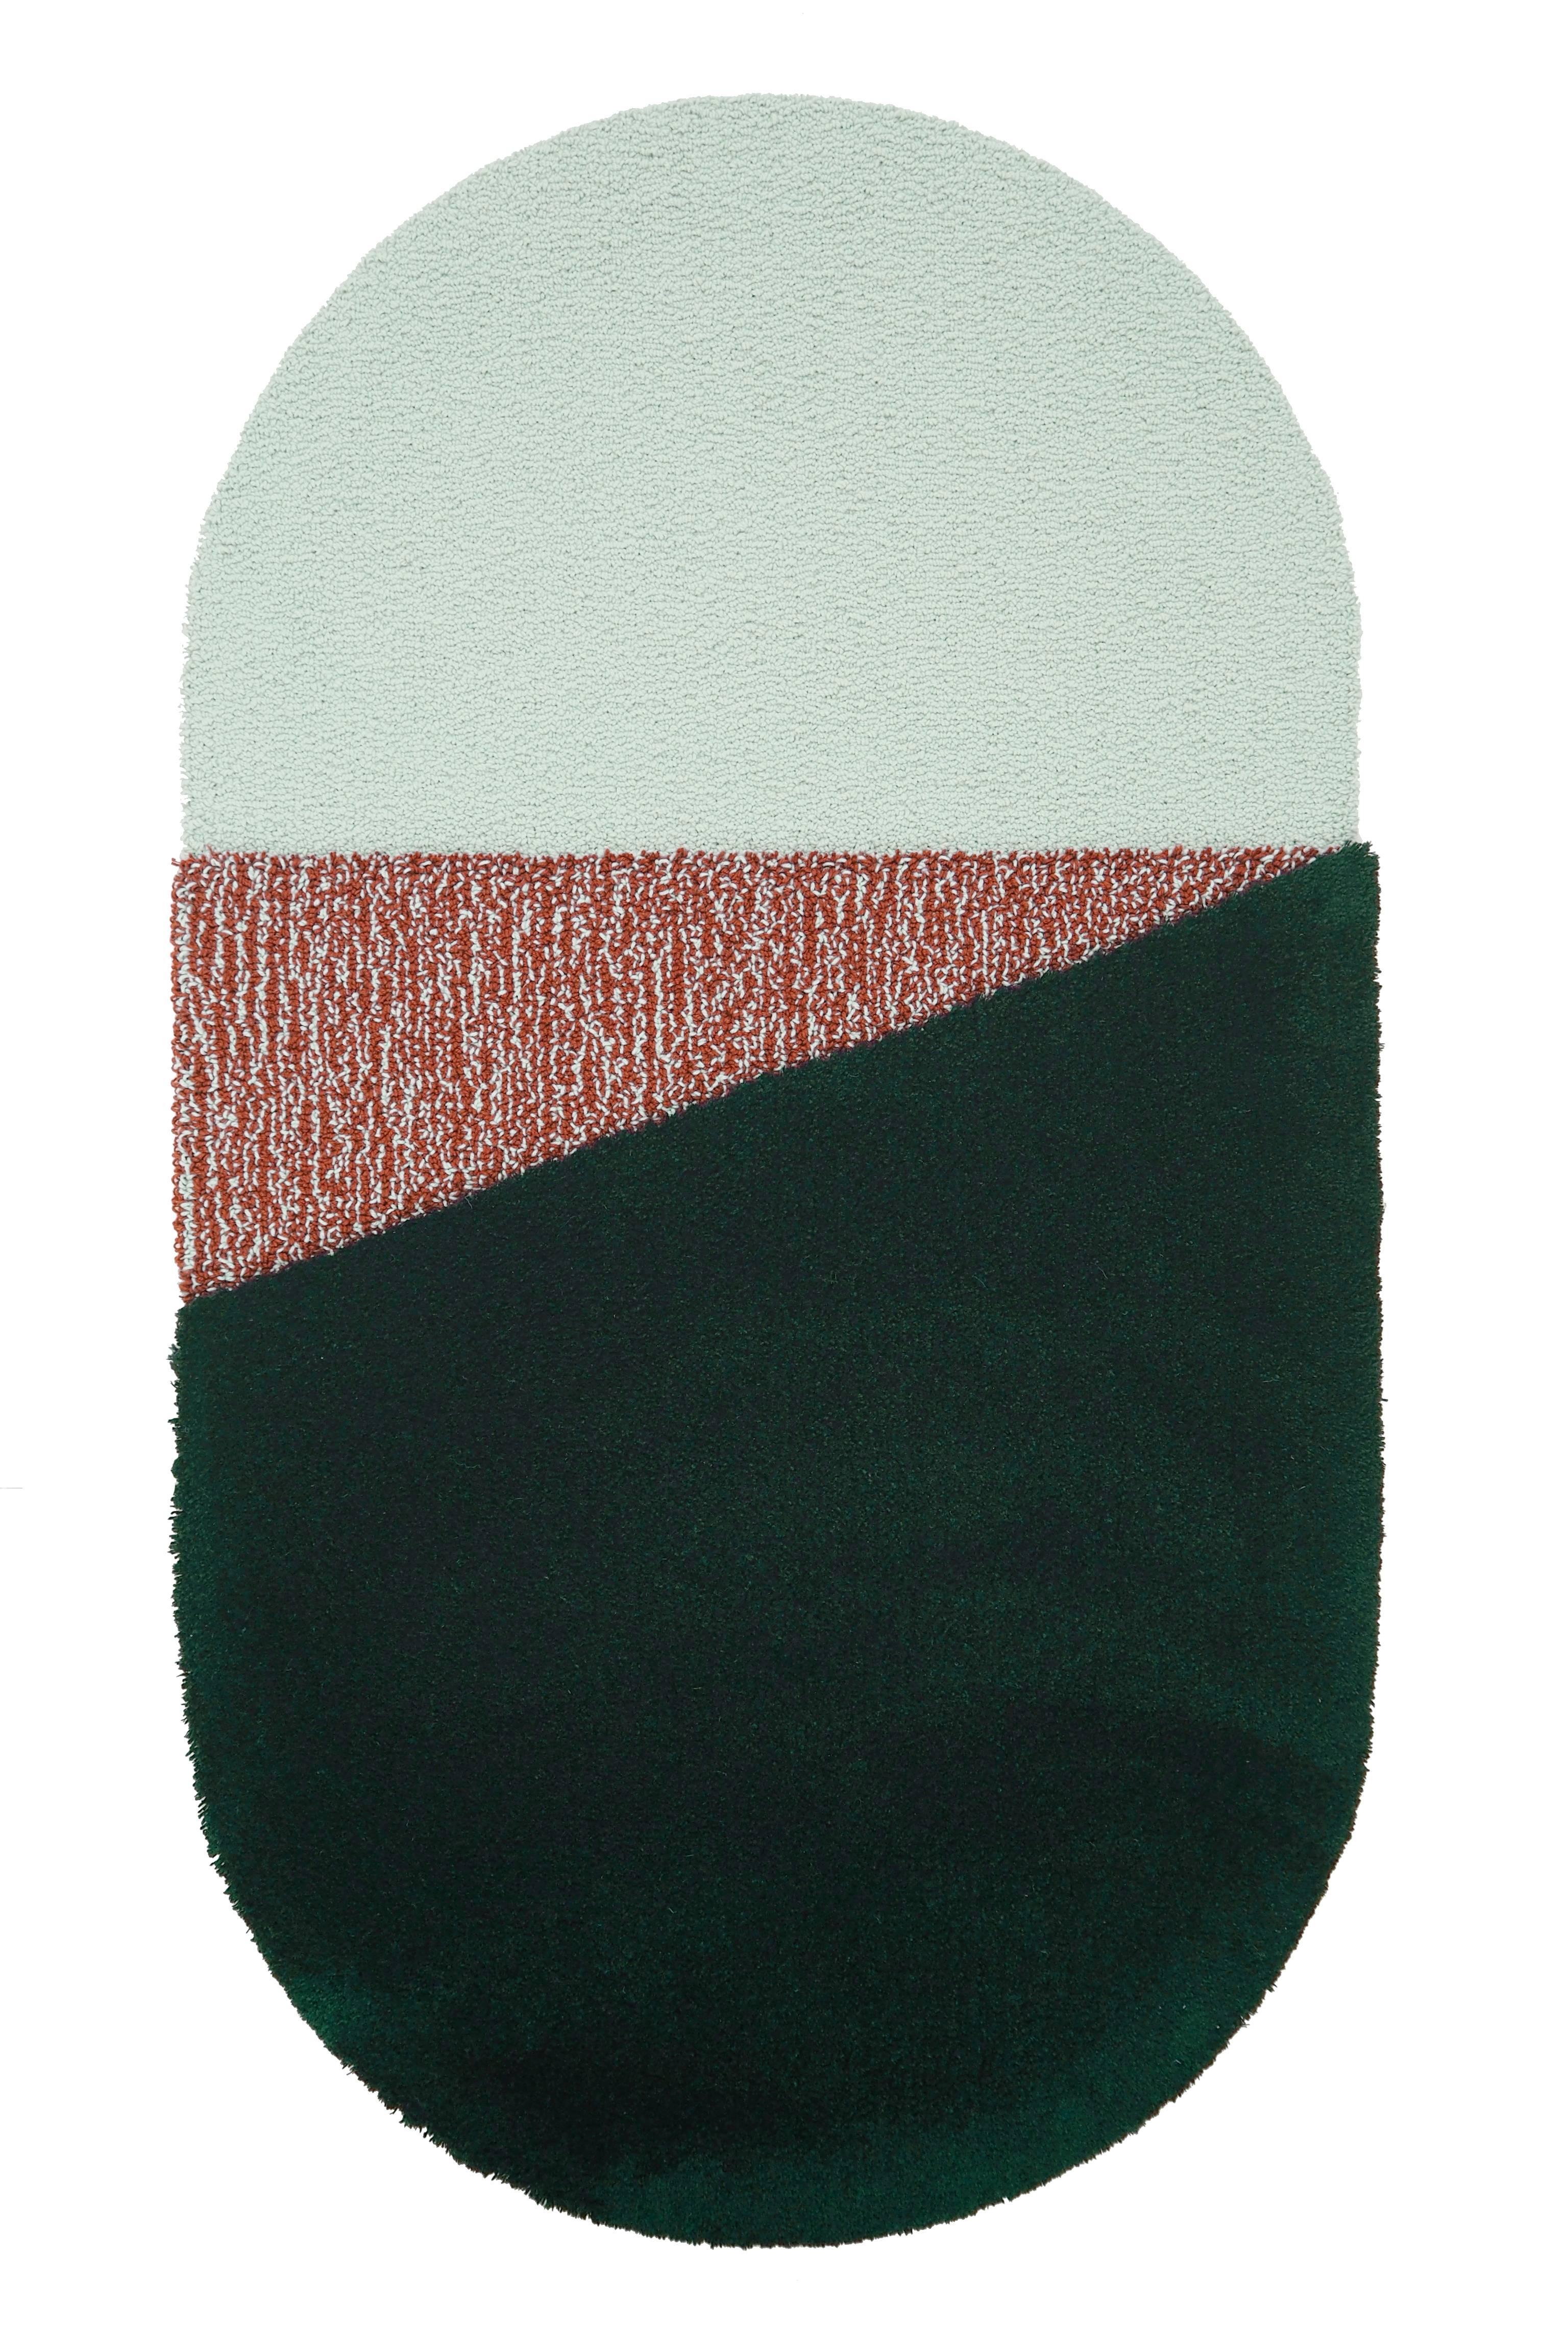 Contemporary Small Green Oci Rug Triptych by Seraina Lareida